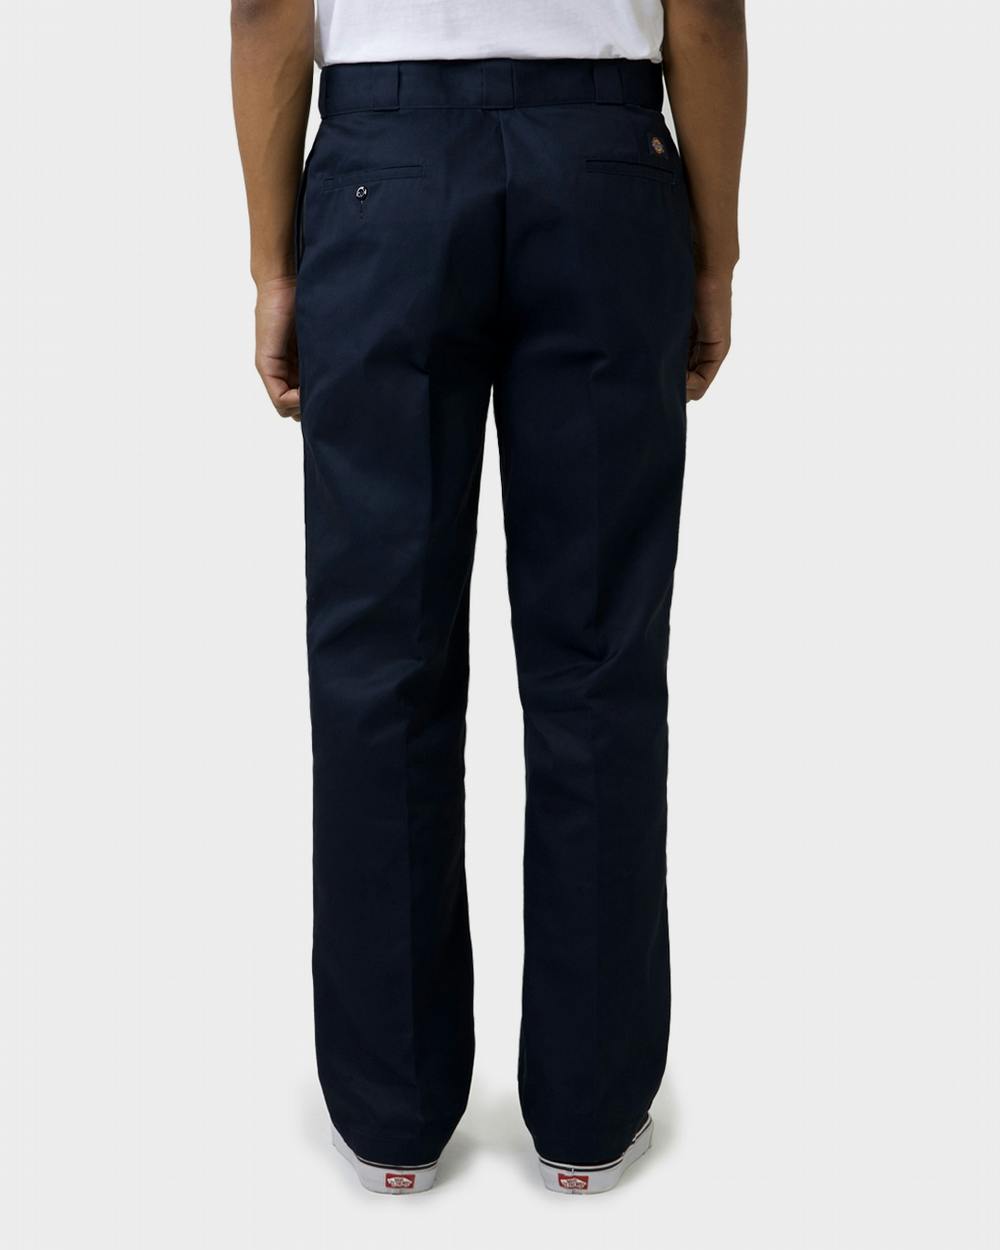 Dickies Original Fit 874 Work Pants (Size 42 - 50)